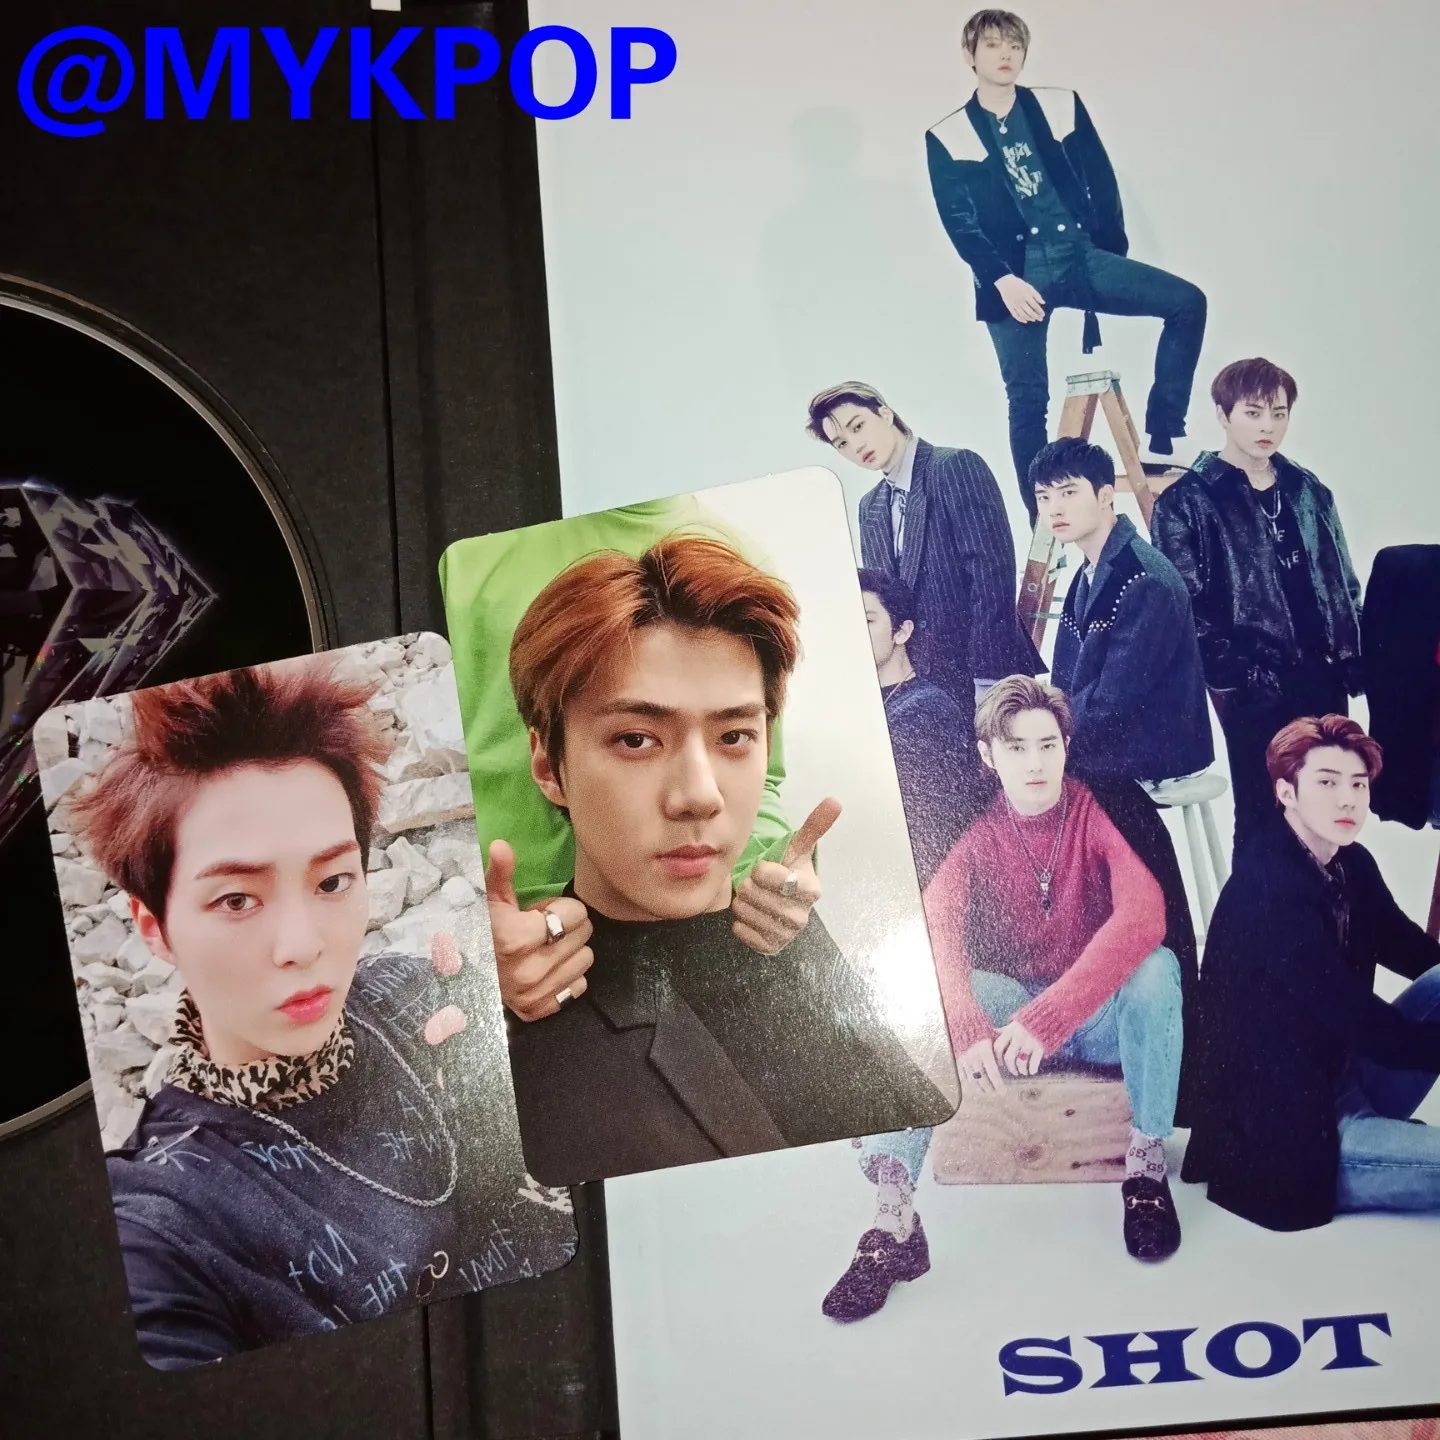 [MYKPOP]~ Официальный~ EXO: LOVE SHOT альбом CD+ случайная карта+ альбом Spine KPOP Fans коллекция SA19081104-SHOT Ver